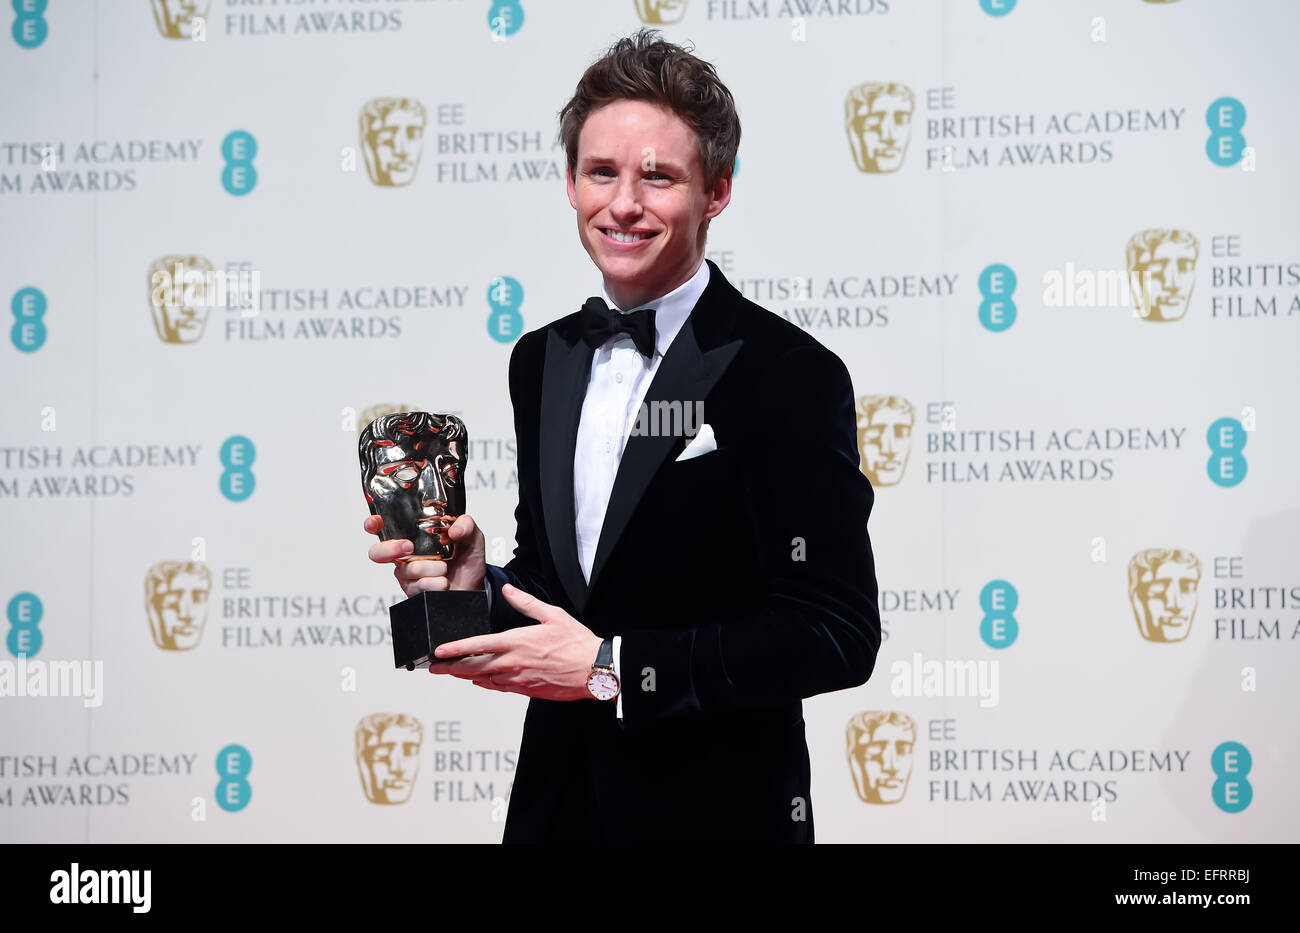 Eddie Redmayne presso l'EE British Academy Film Awards presso la Royal Opera House il 8 febbraio 2015 a Londra, Inghilterra. Foto Stock